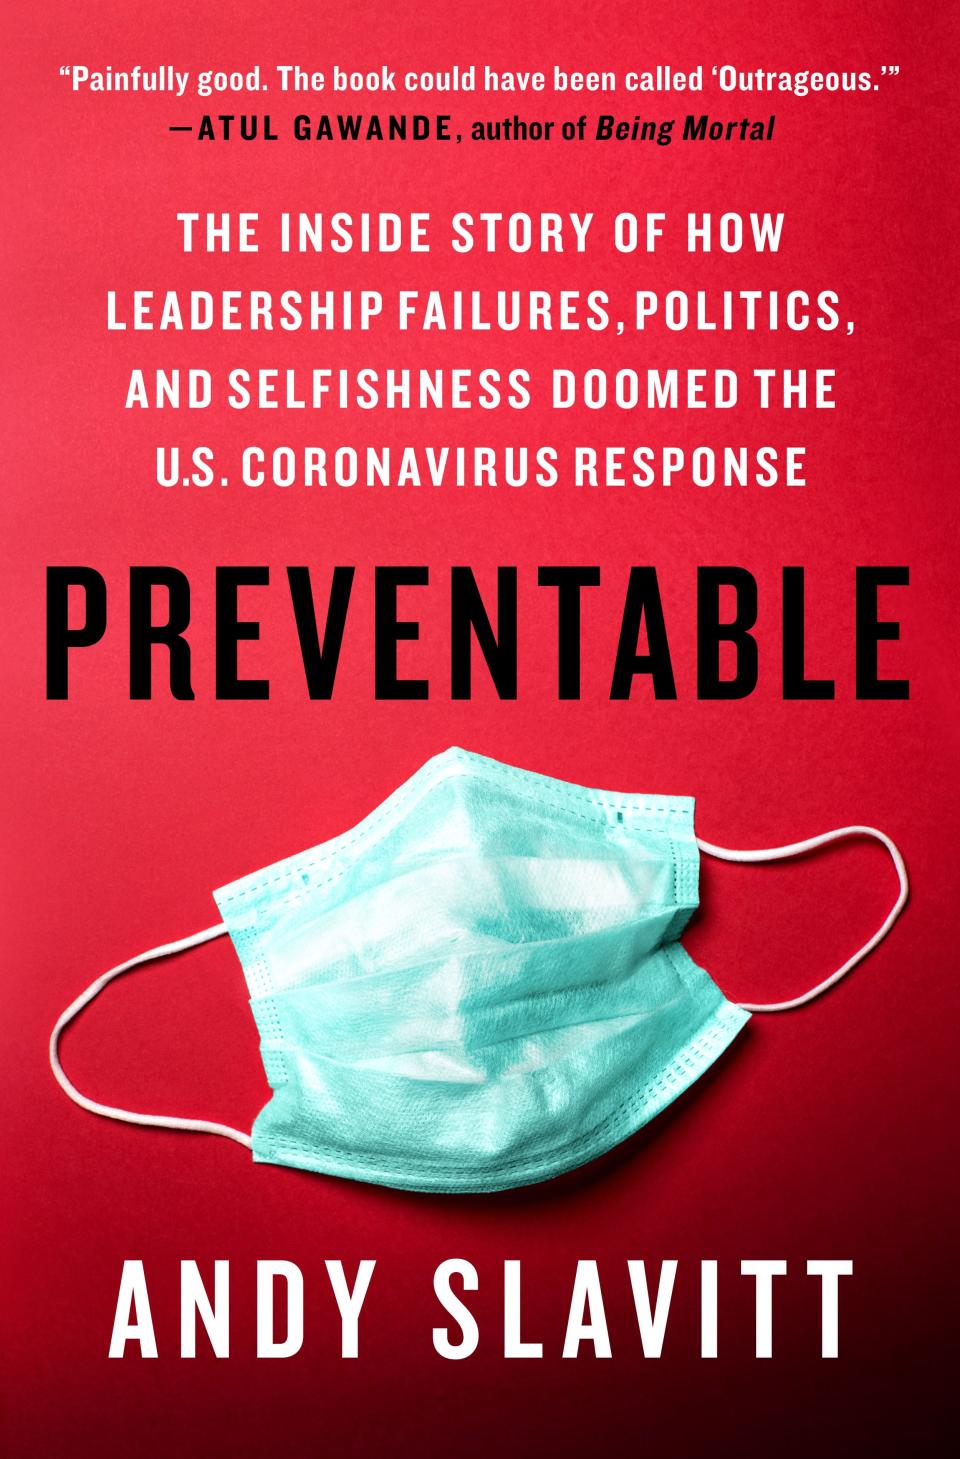 Cover of "Preventable: The Inside Story of How Leadership Failures, Politics, and Selfishness Doomed the U.S. Coronavirus Response," by Andy Slavitt, publishing June 15, 2021.